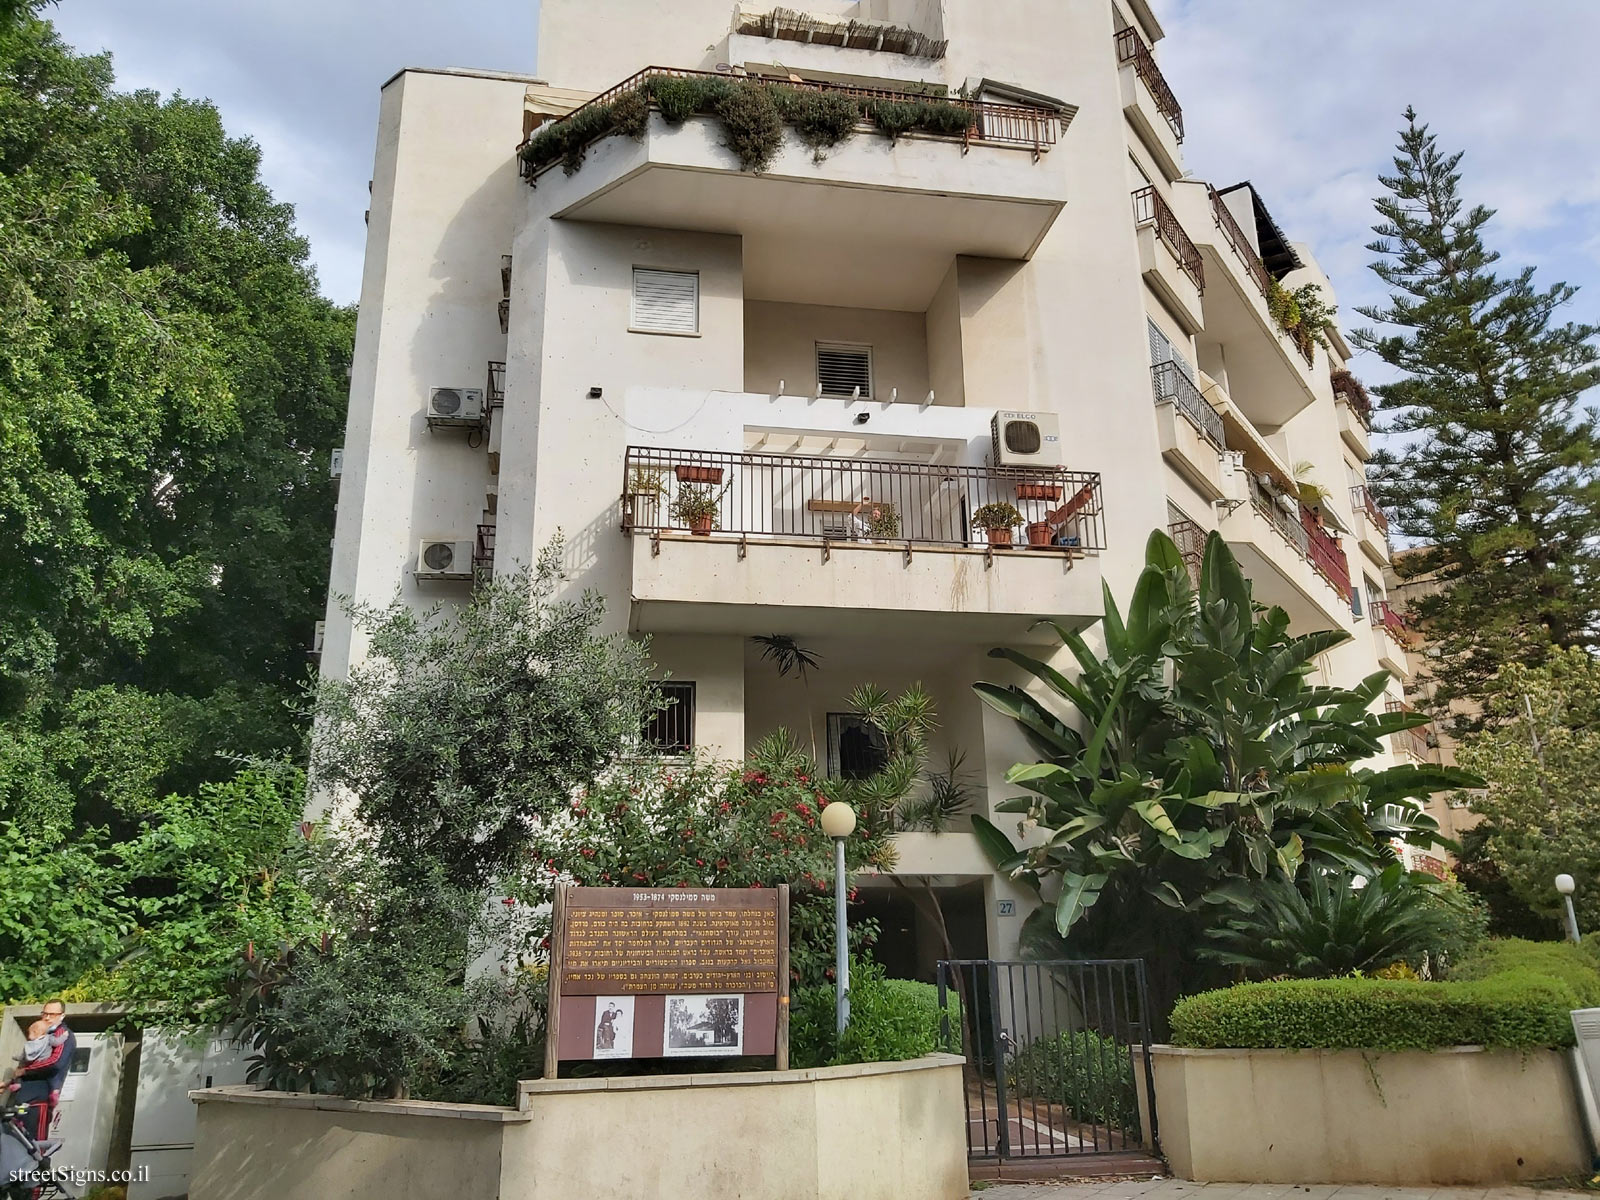 Rehovot - Moshe Smilansky’s home - Ya’akov St 27, Rehovot, Israel